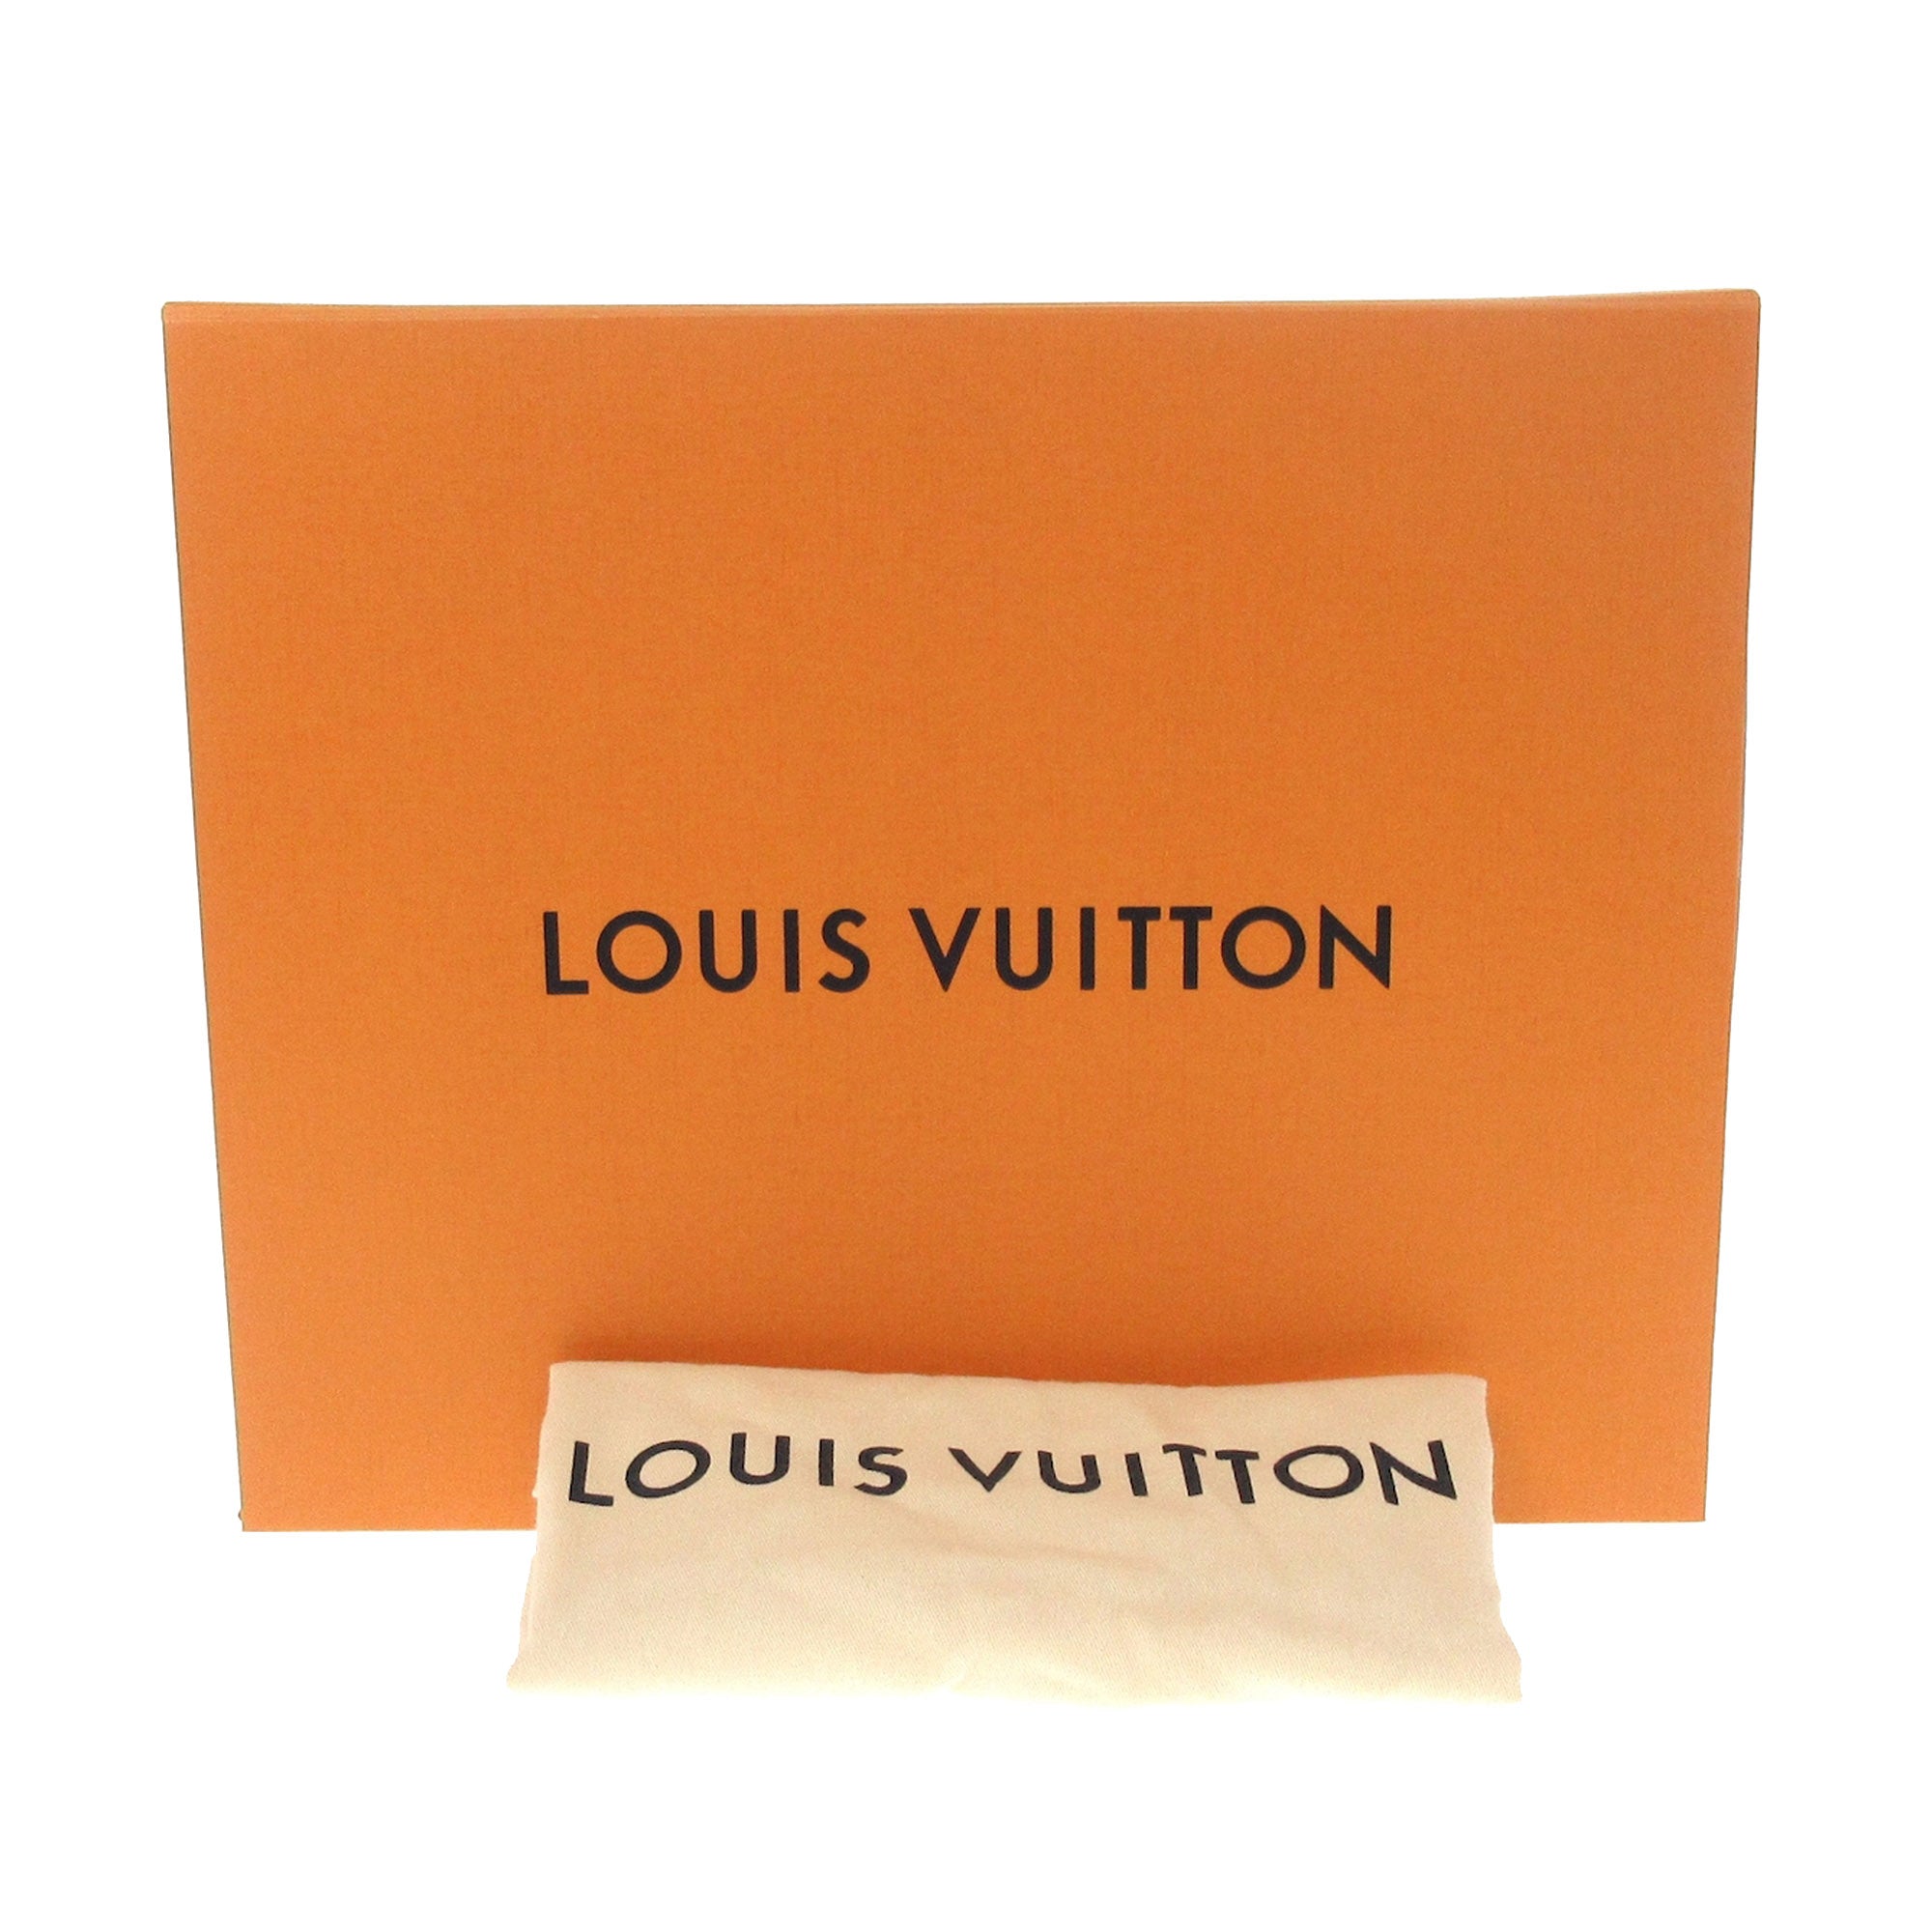 Louis Vuitton Opening Hours Boston